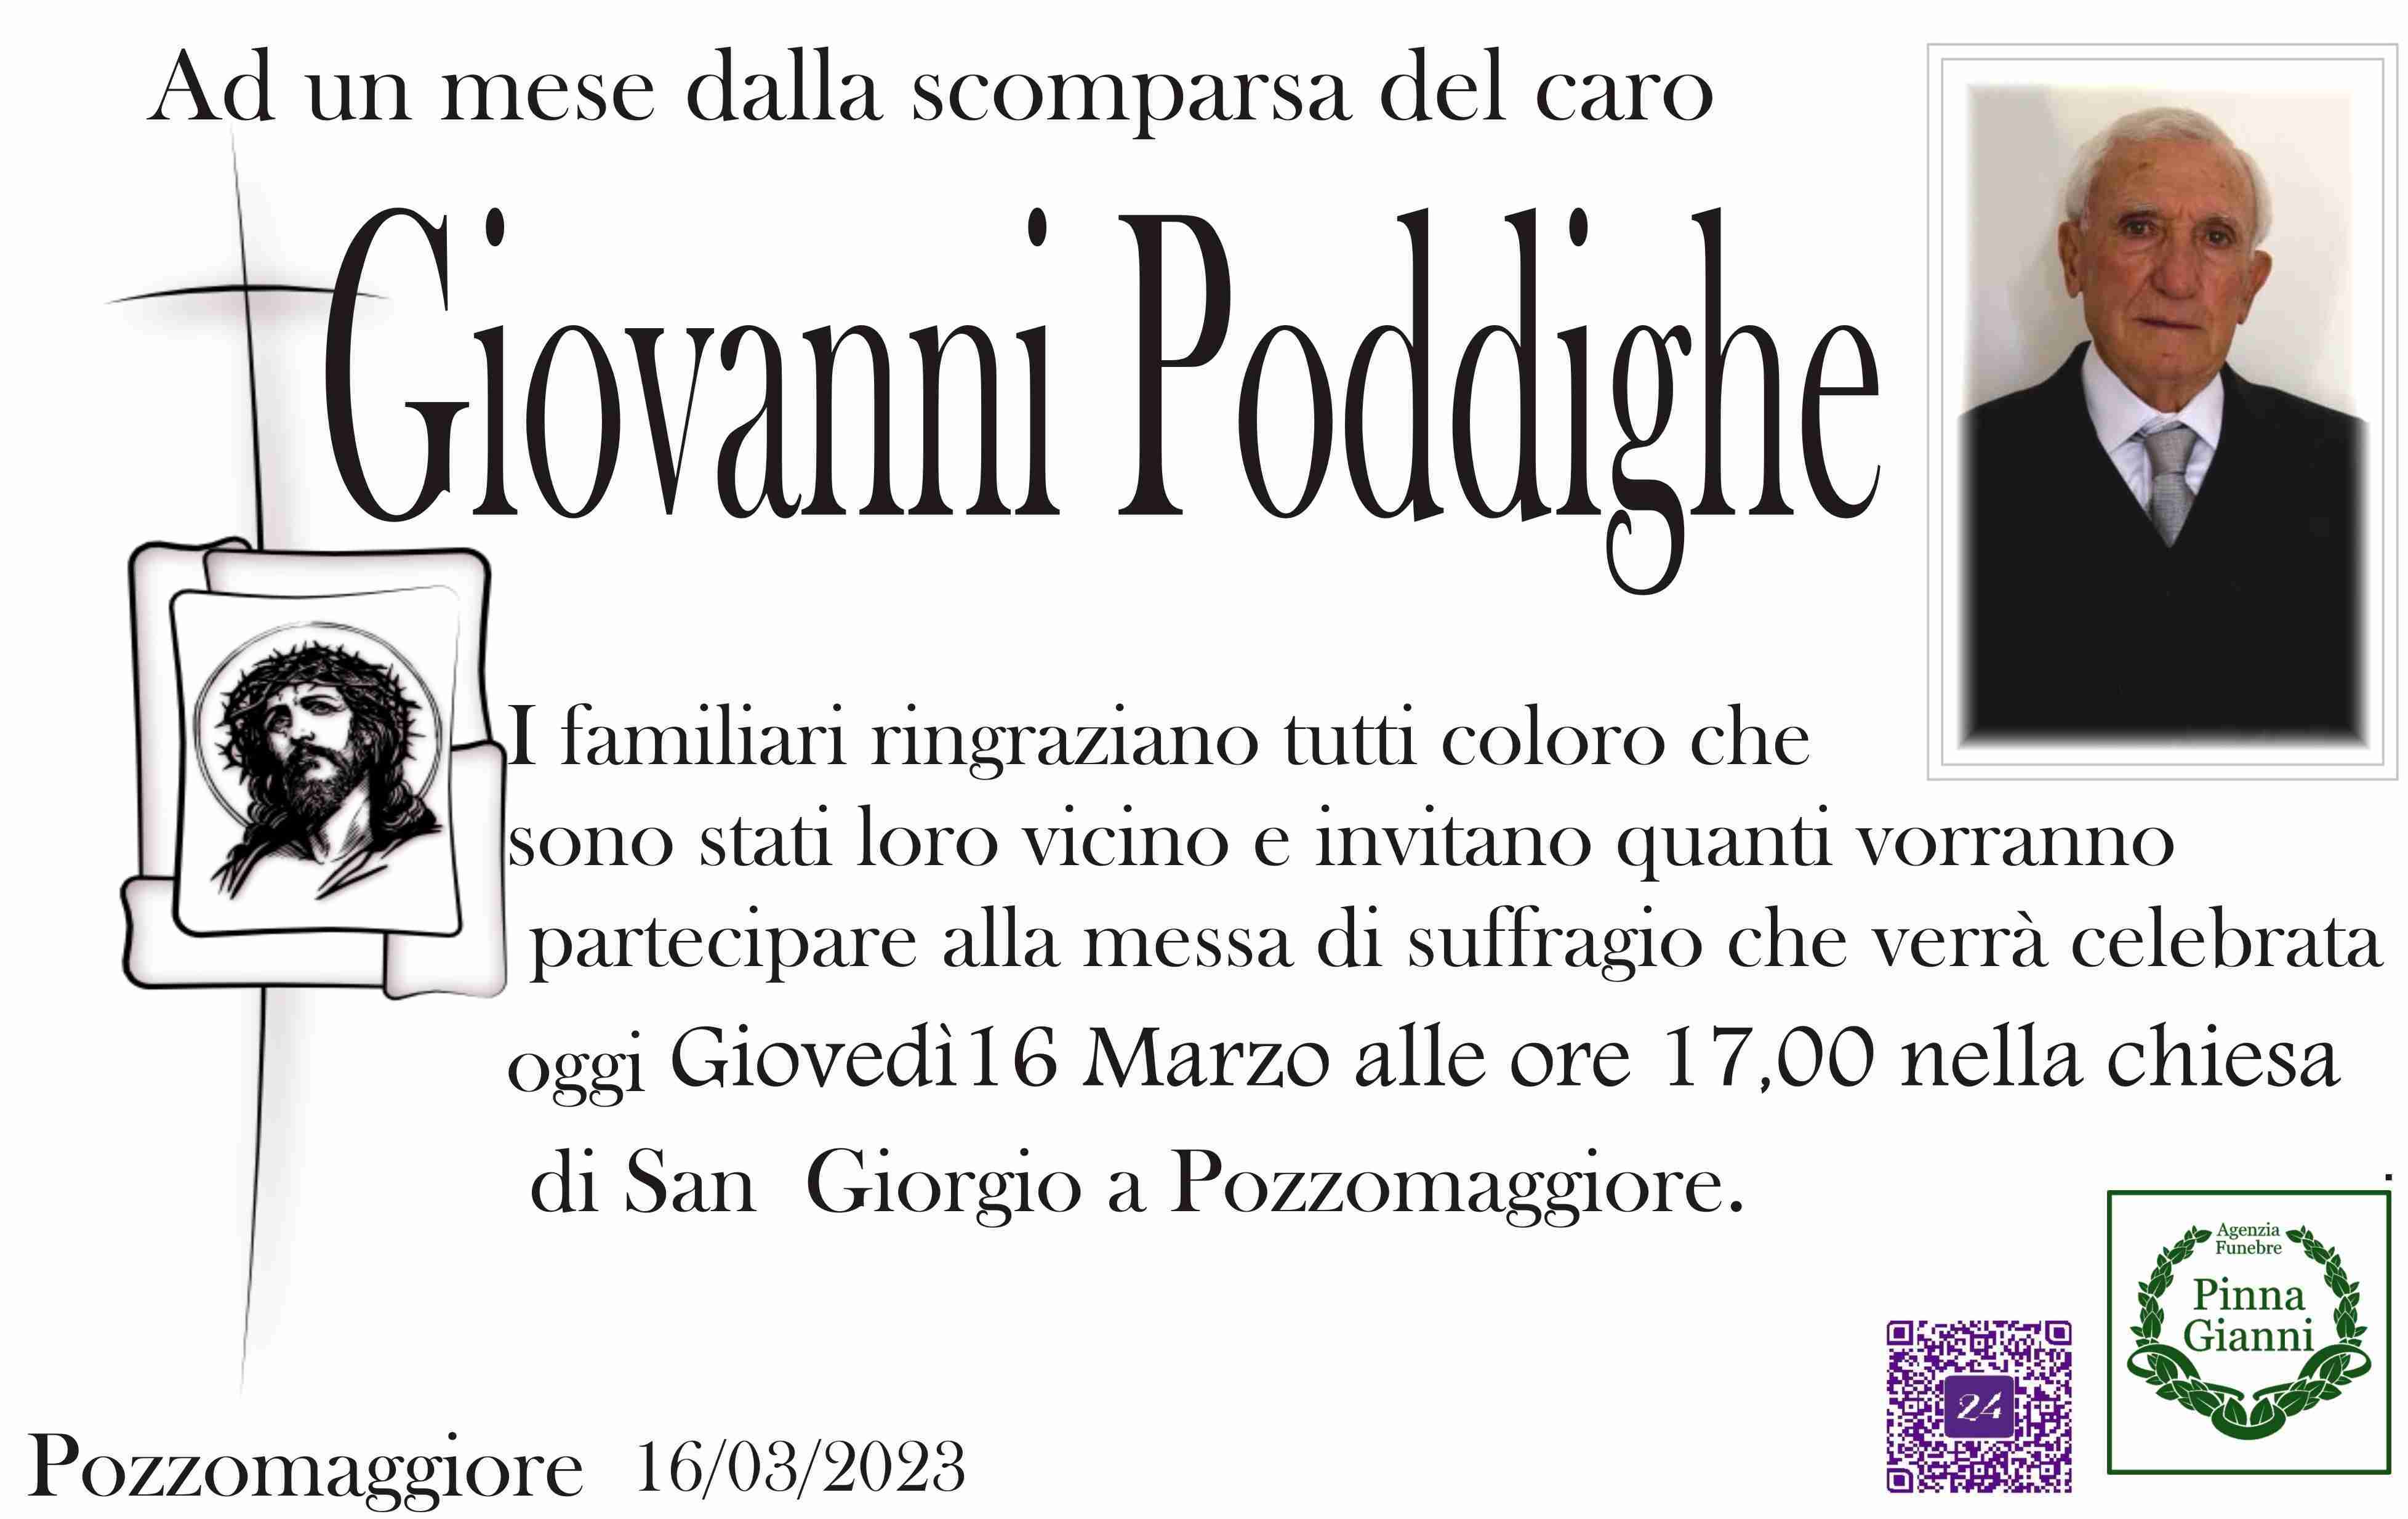 Giovanni Poddighe